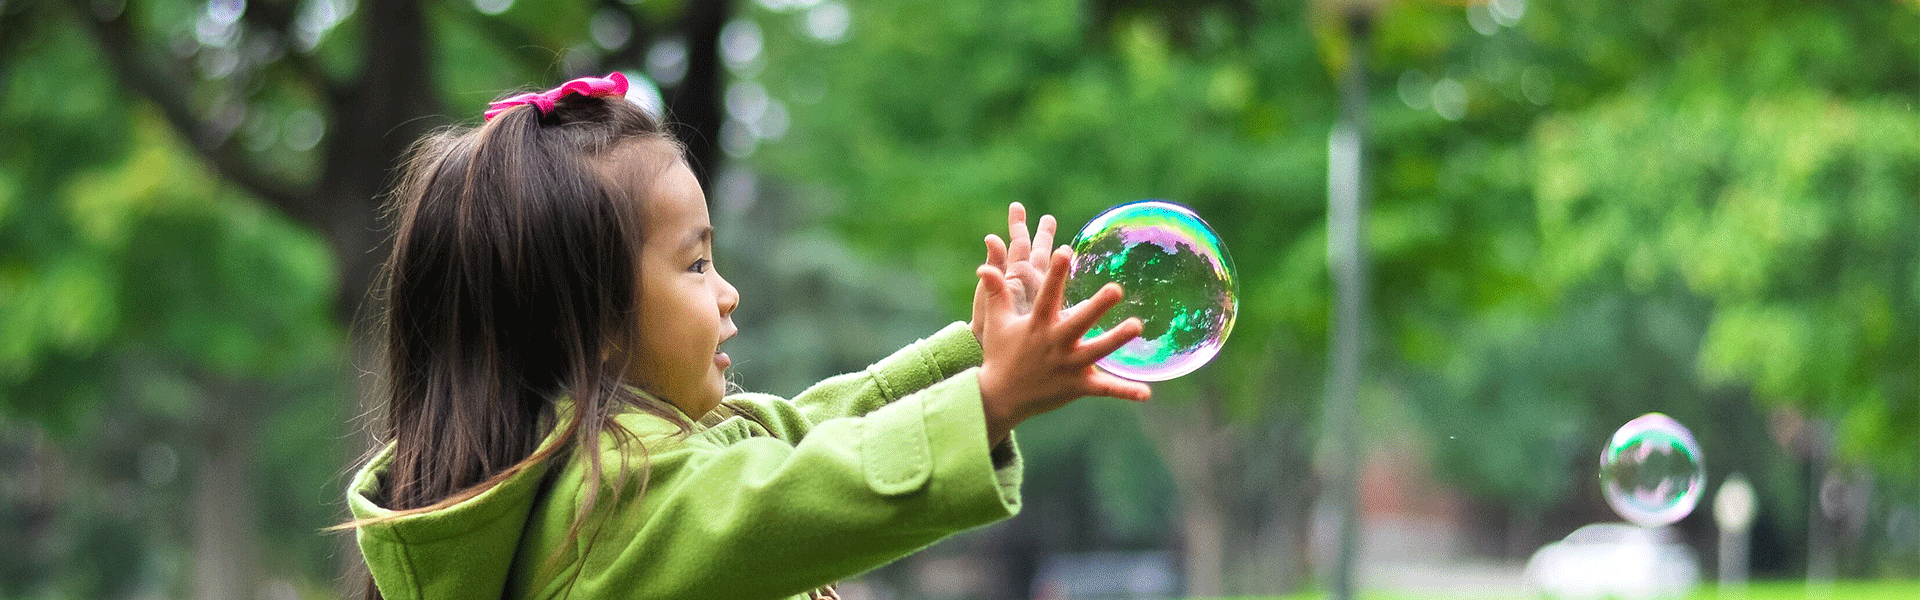 child chasing bubbles